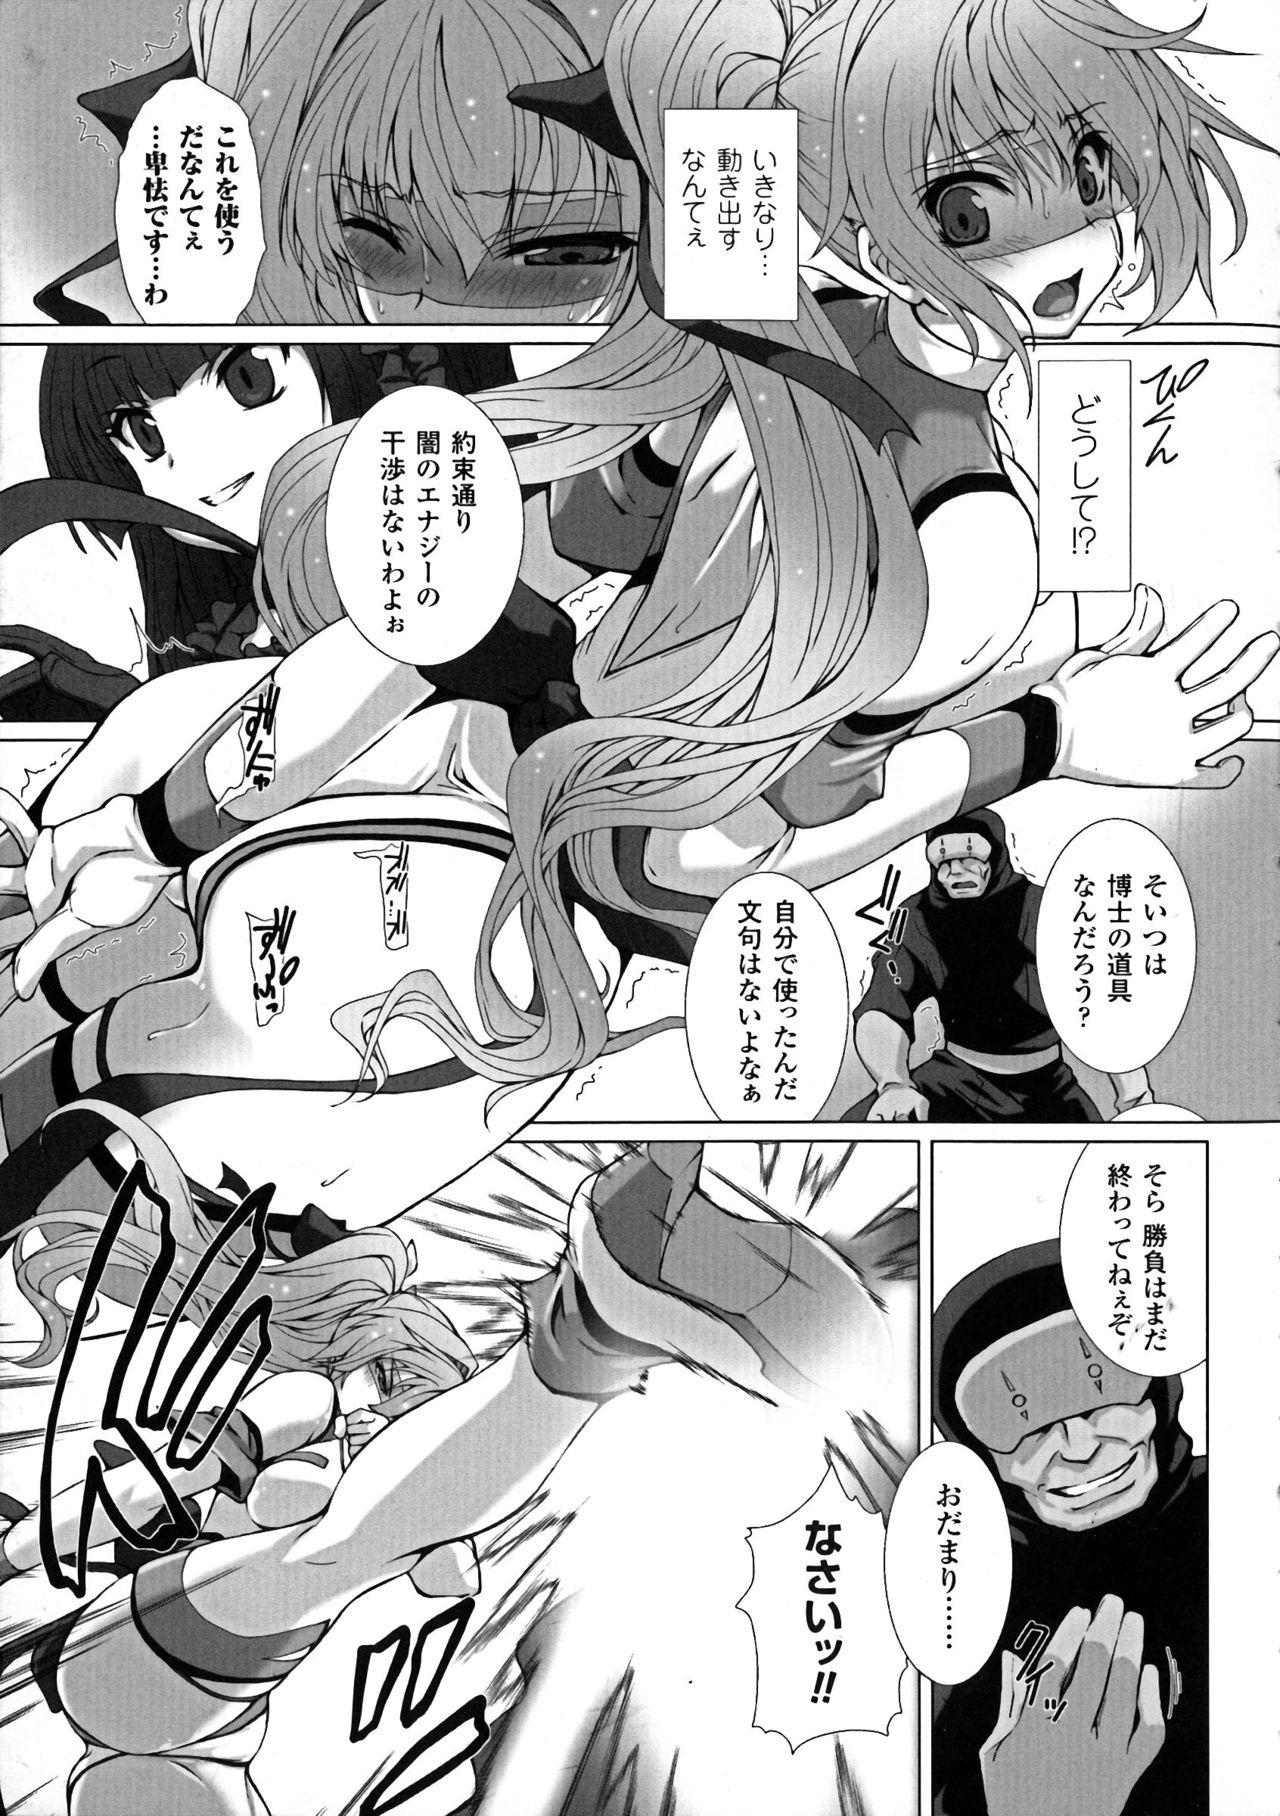 Seigi no Heroine Kangoku File DX vol. 6 12